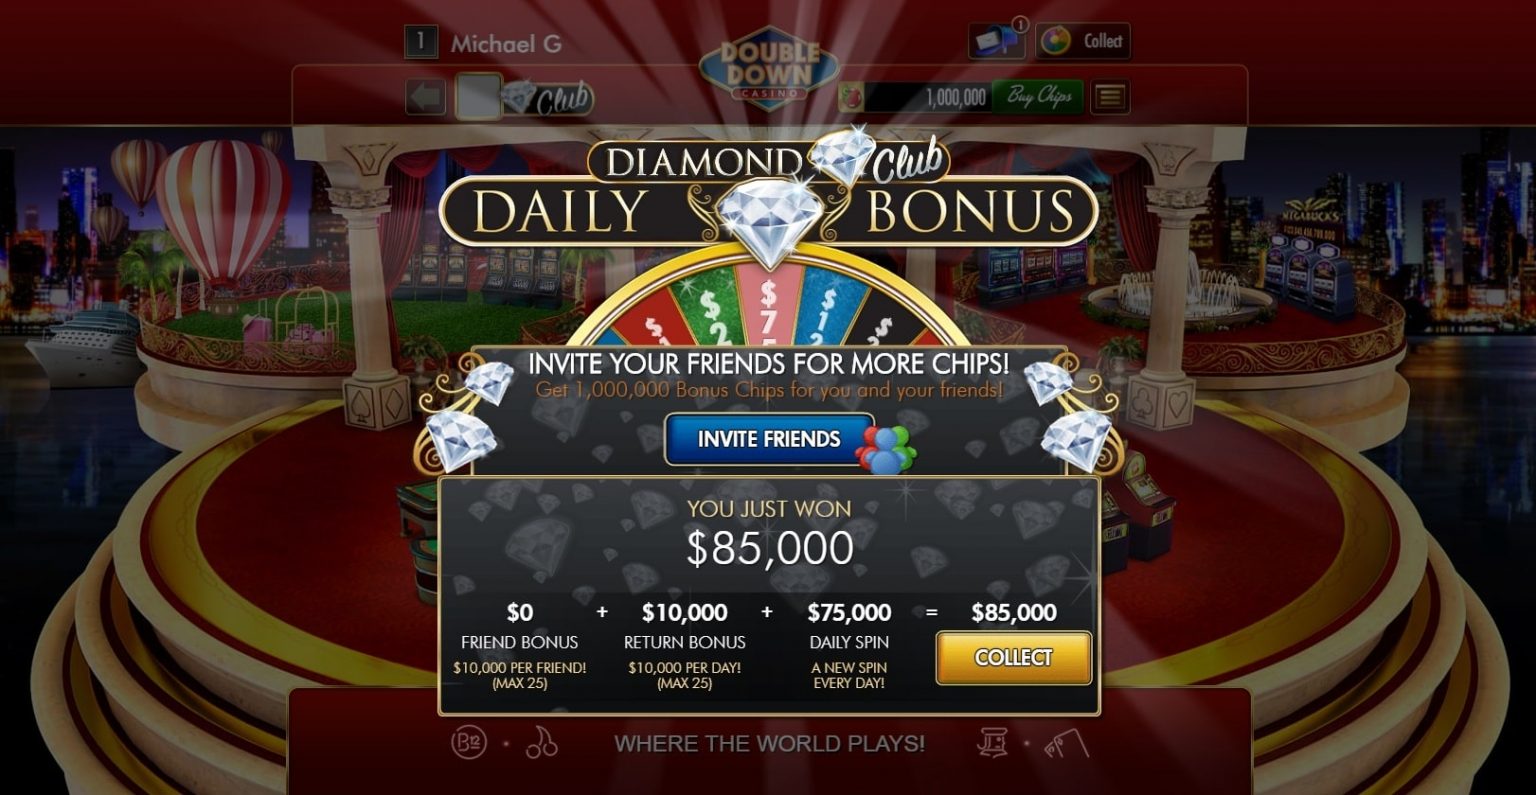 double down casino games facebook